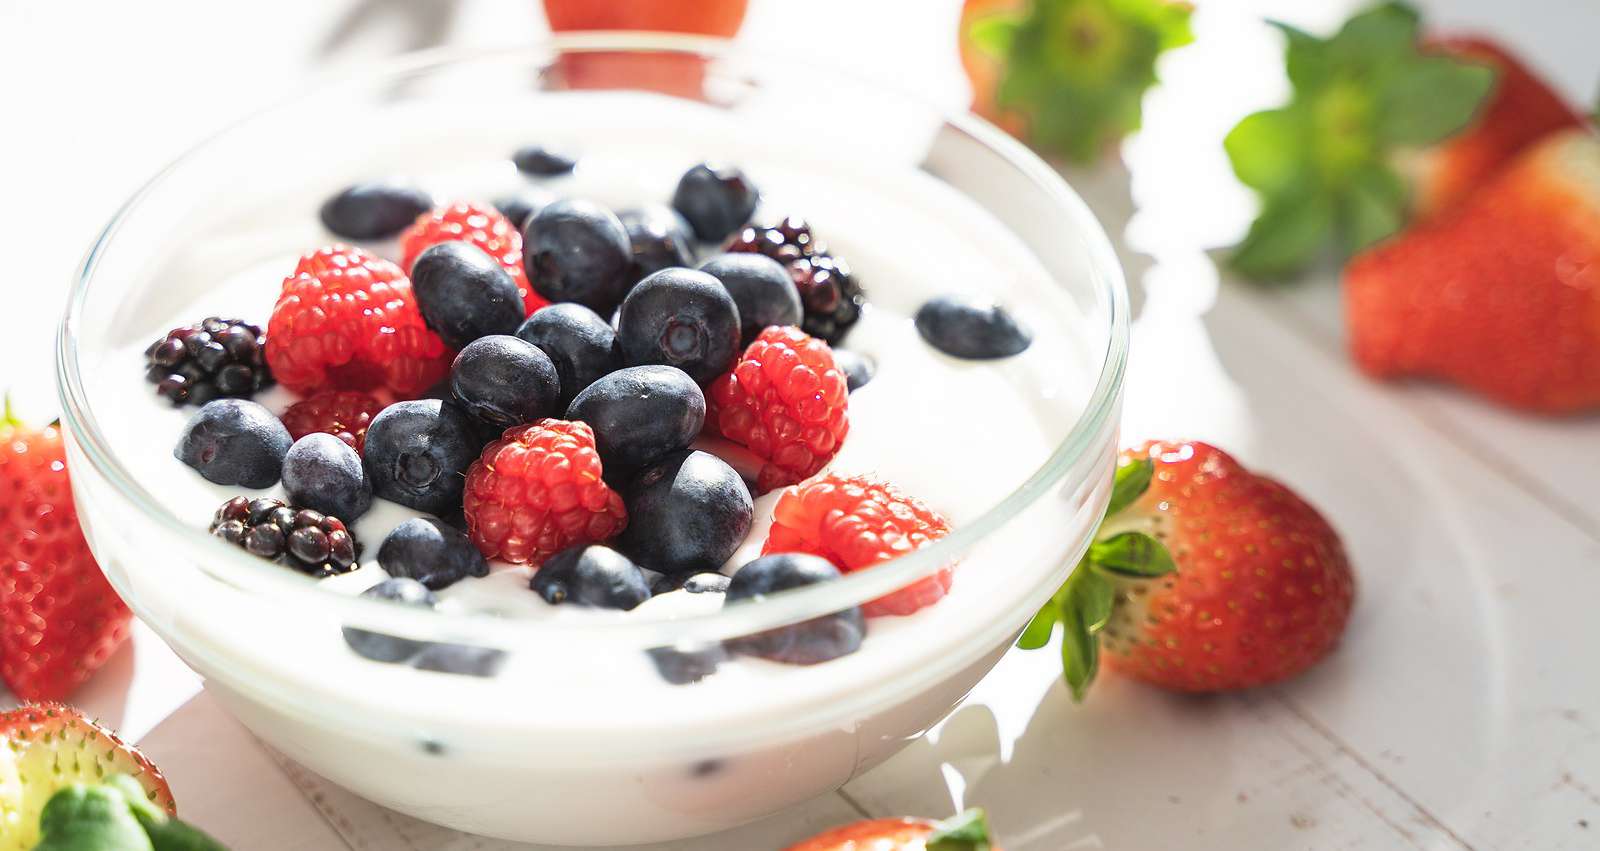 Yogurt with Fruit & Chocolate Covered Almonds